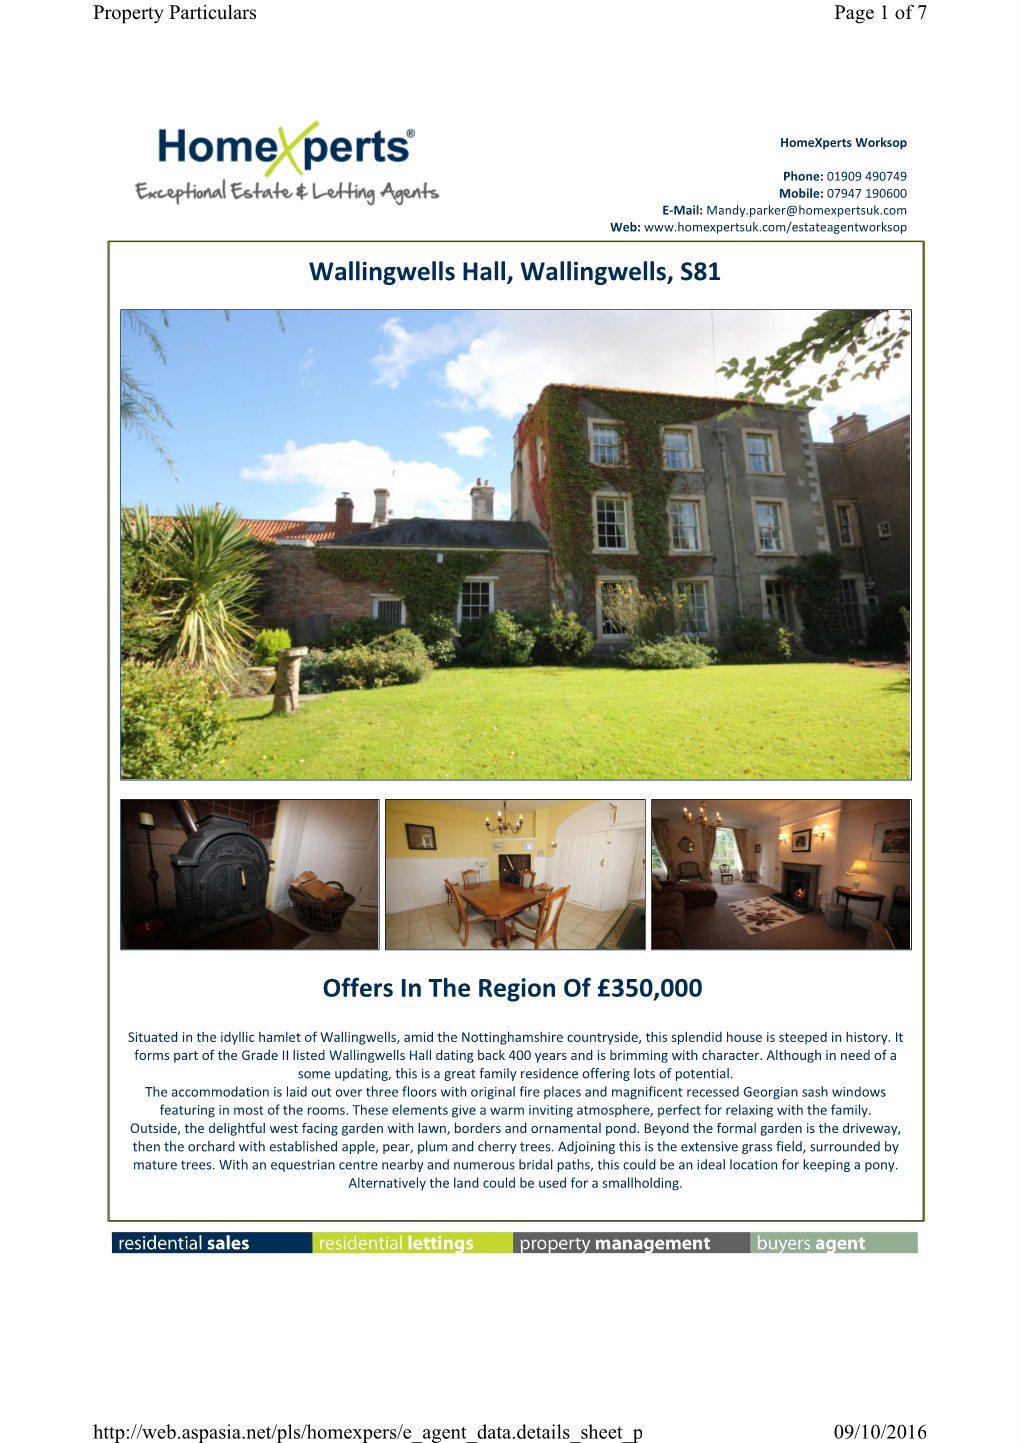 Wallingwells Hall, Wallingwells, S81 Offers in the Region of £350,000